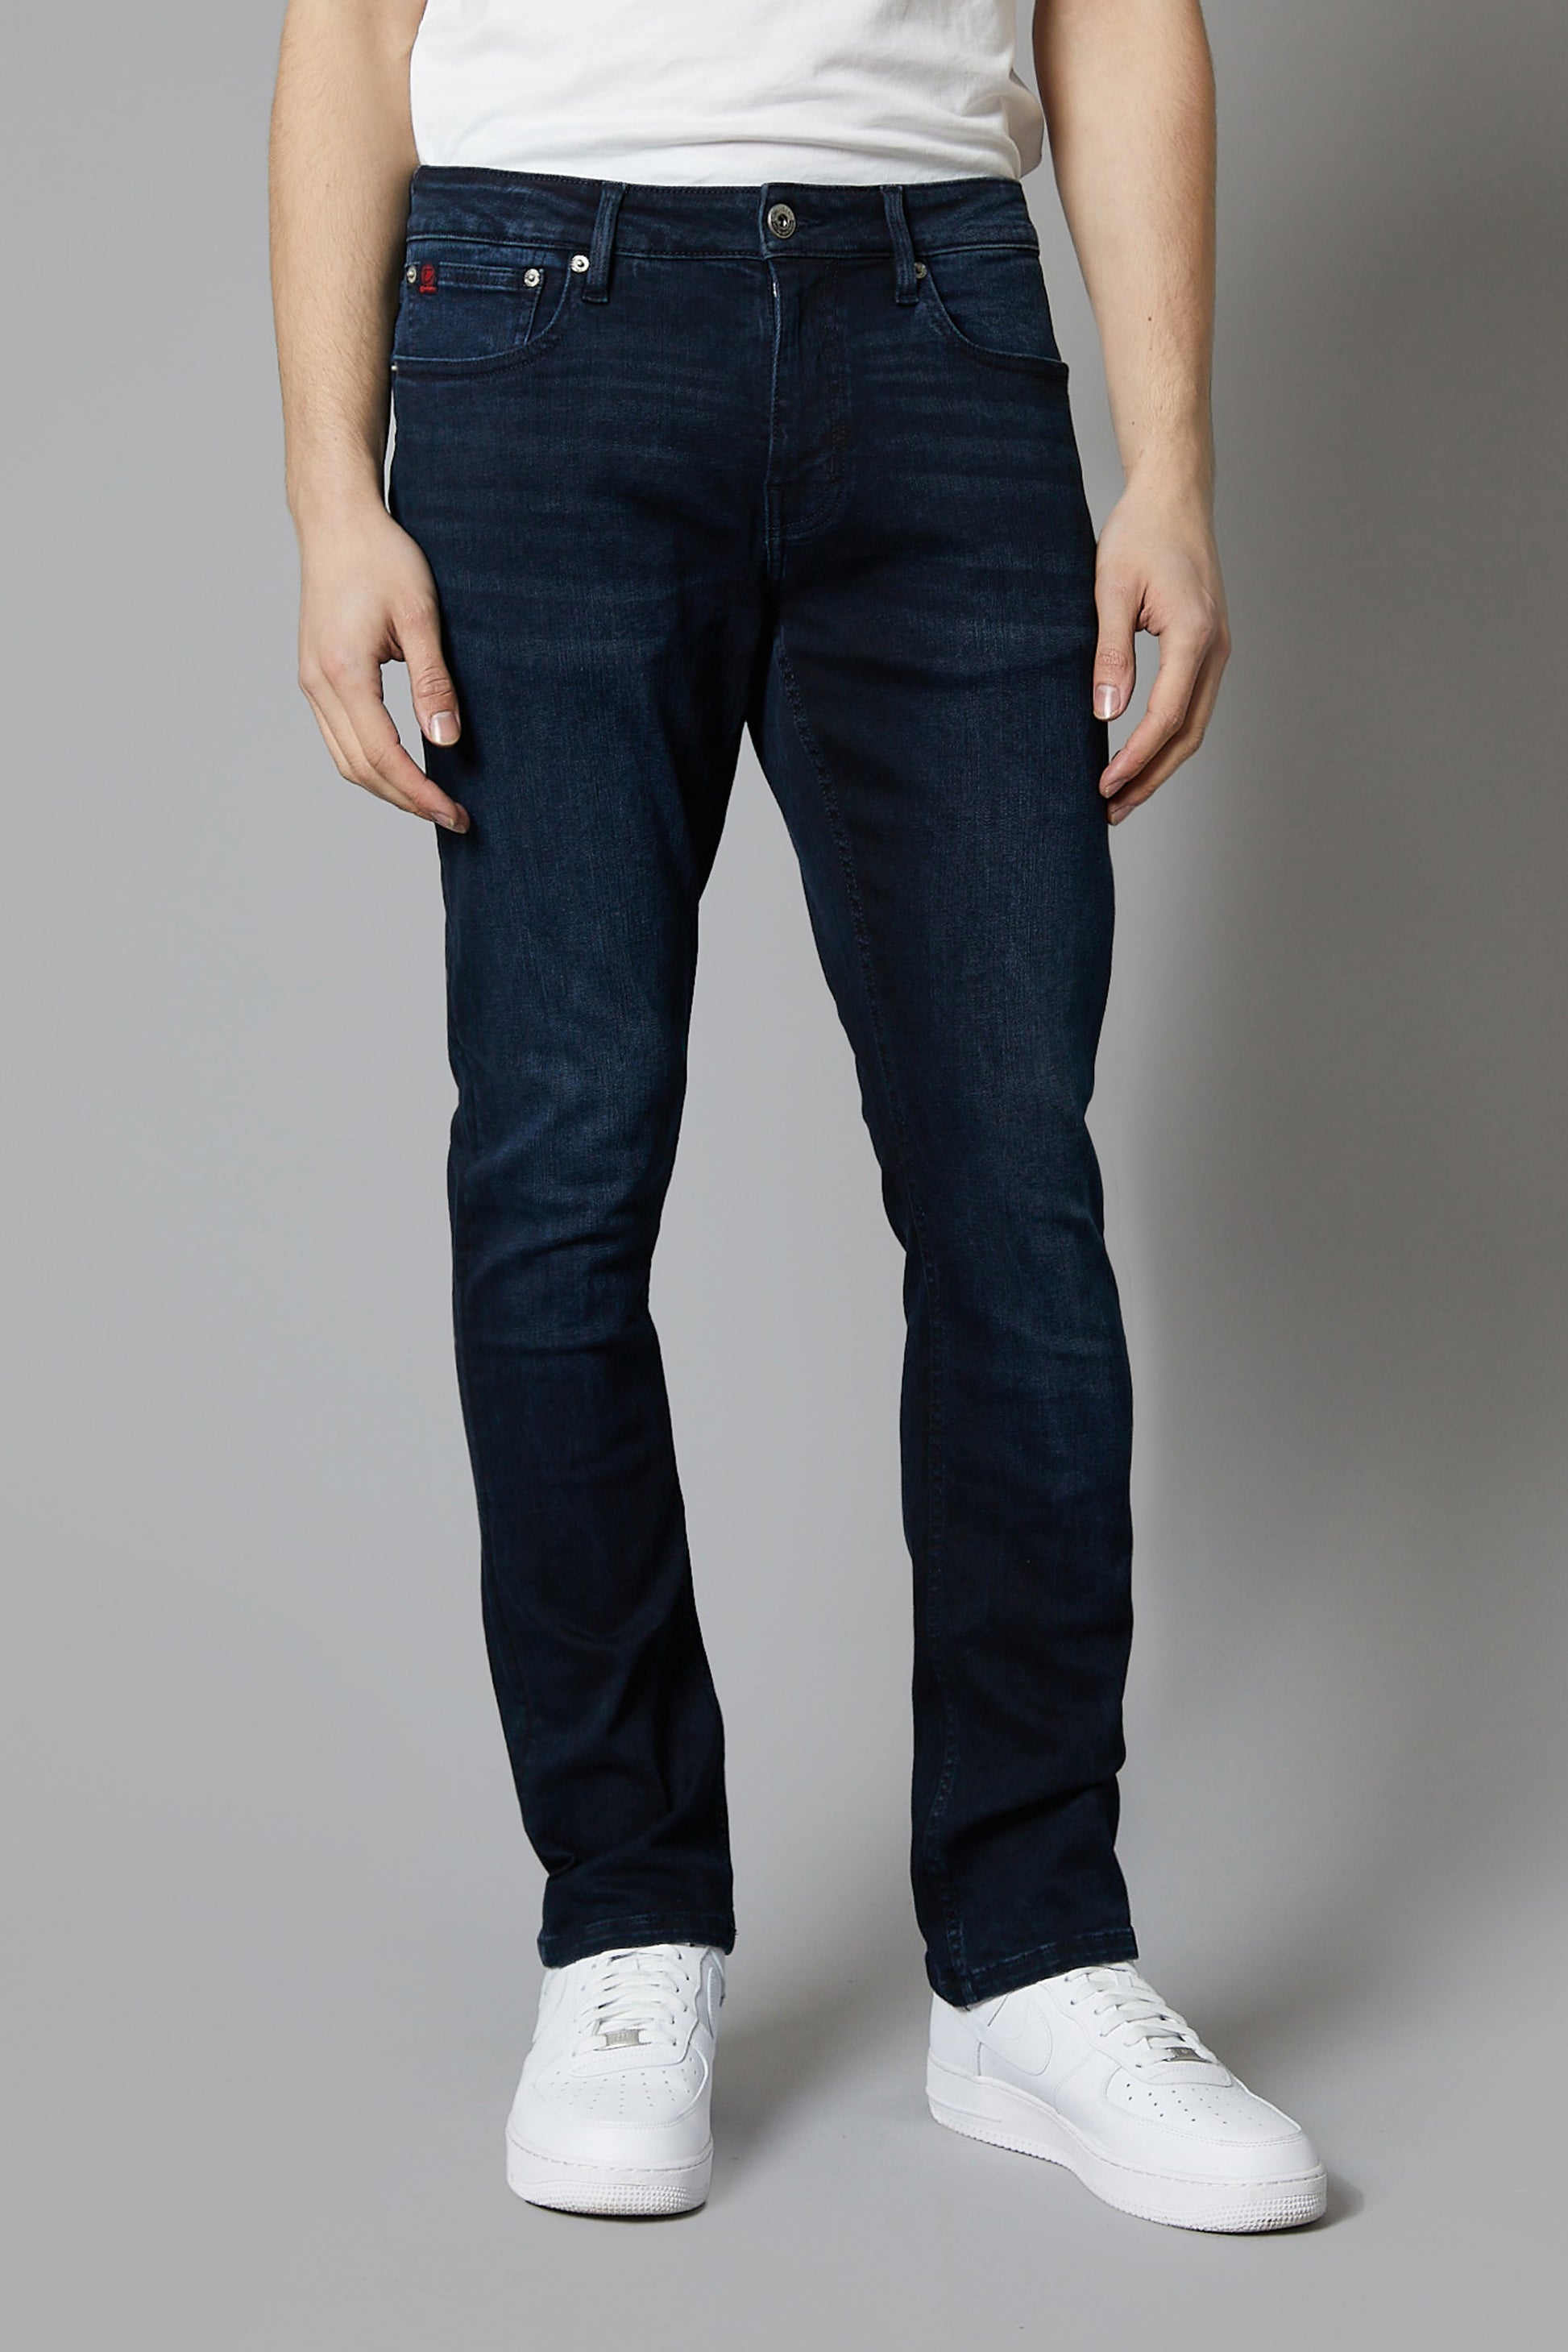 DML Jeans Alaska mens Ink Blue straight leg denim jeans front view